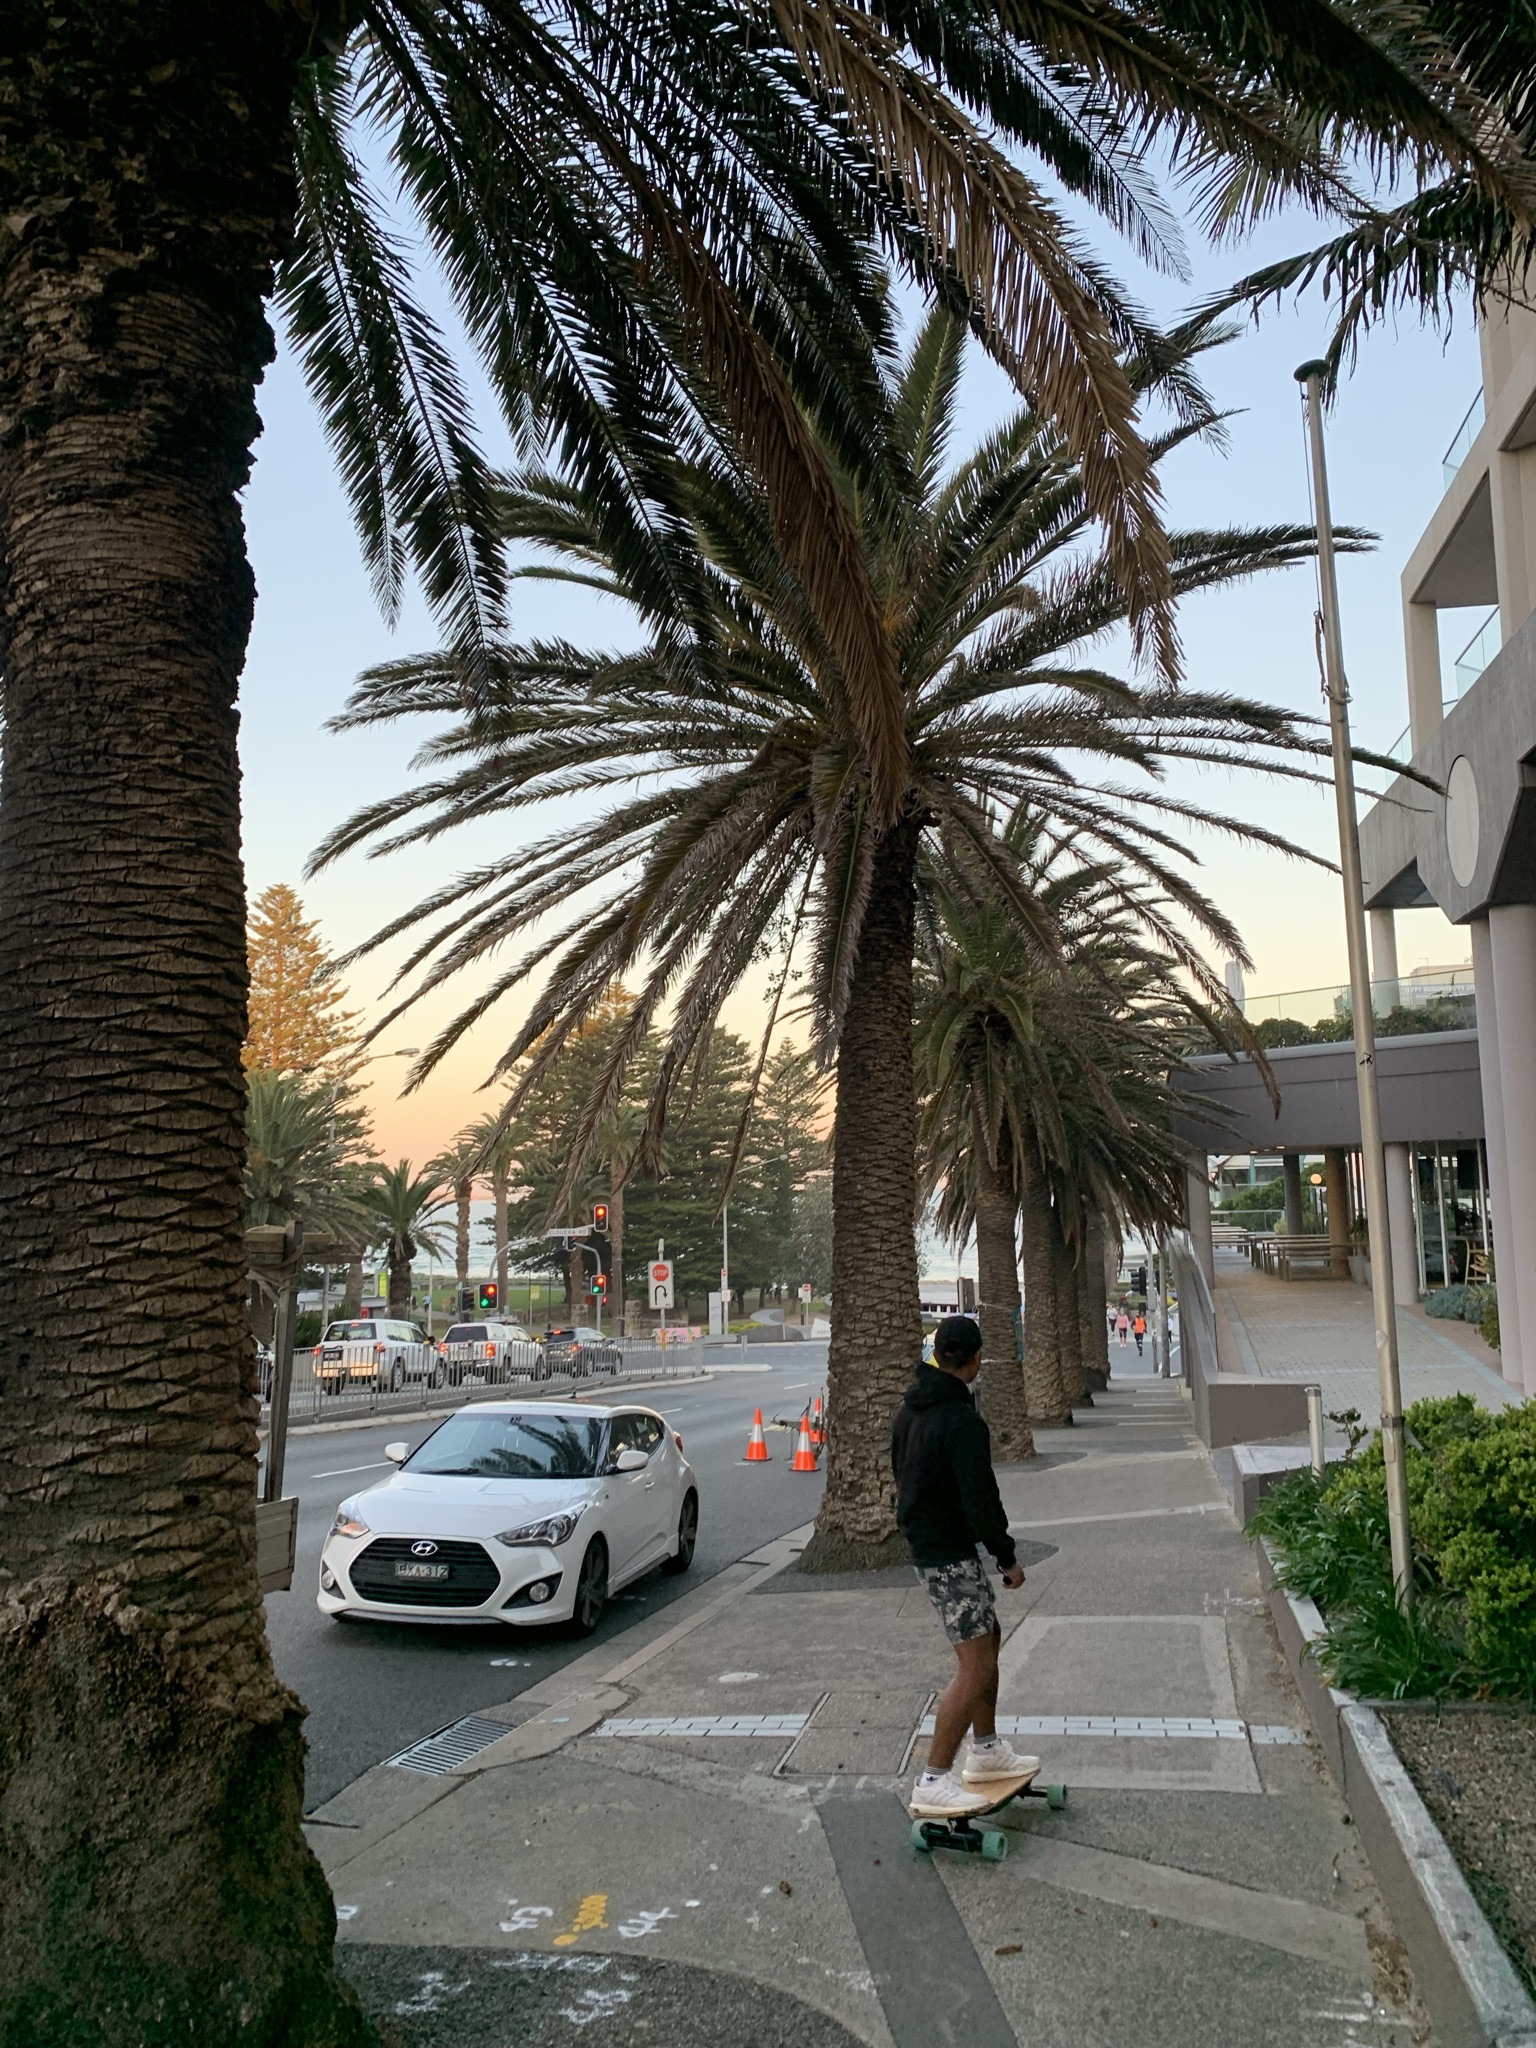 Kingsway palm trees, last days